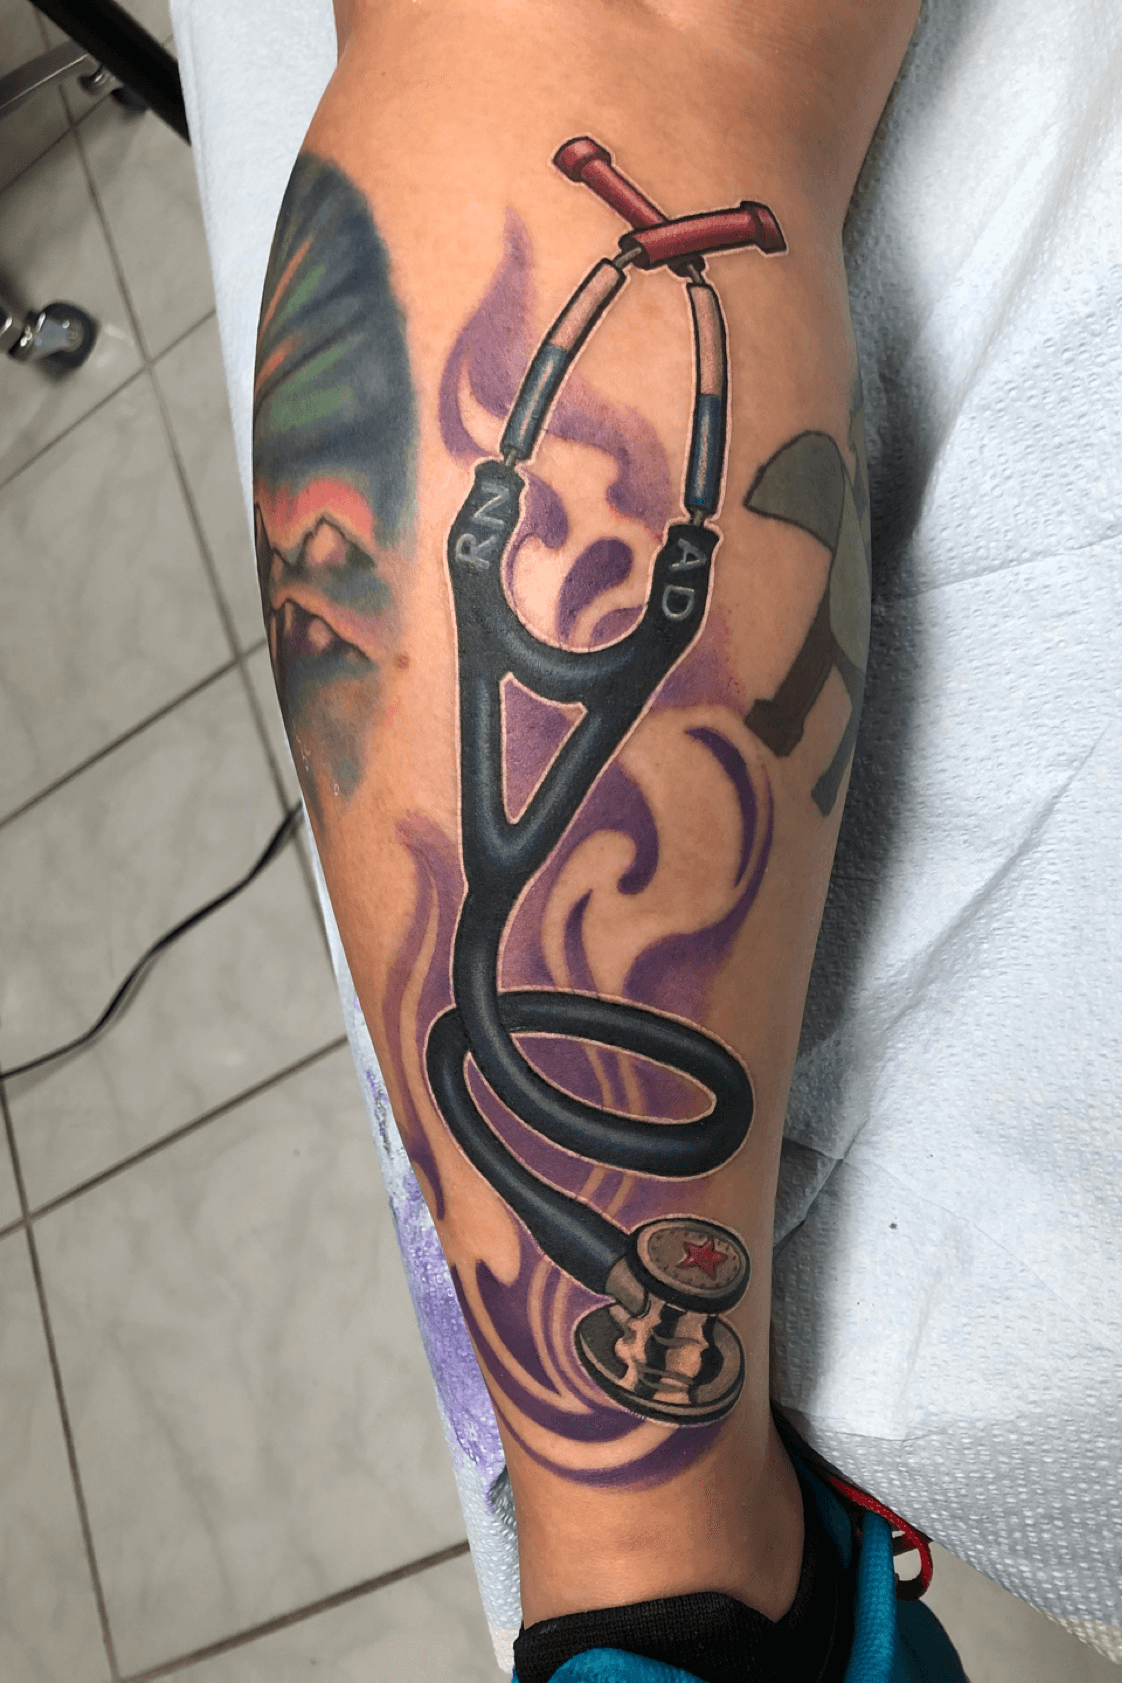 stethoscope tattoo 1 by thelittlered on DeviantArt